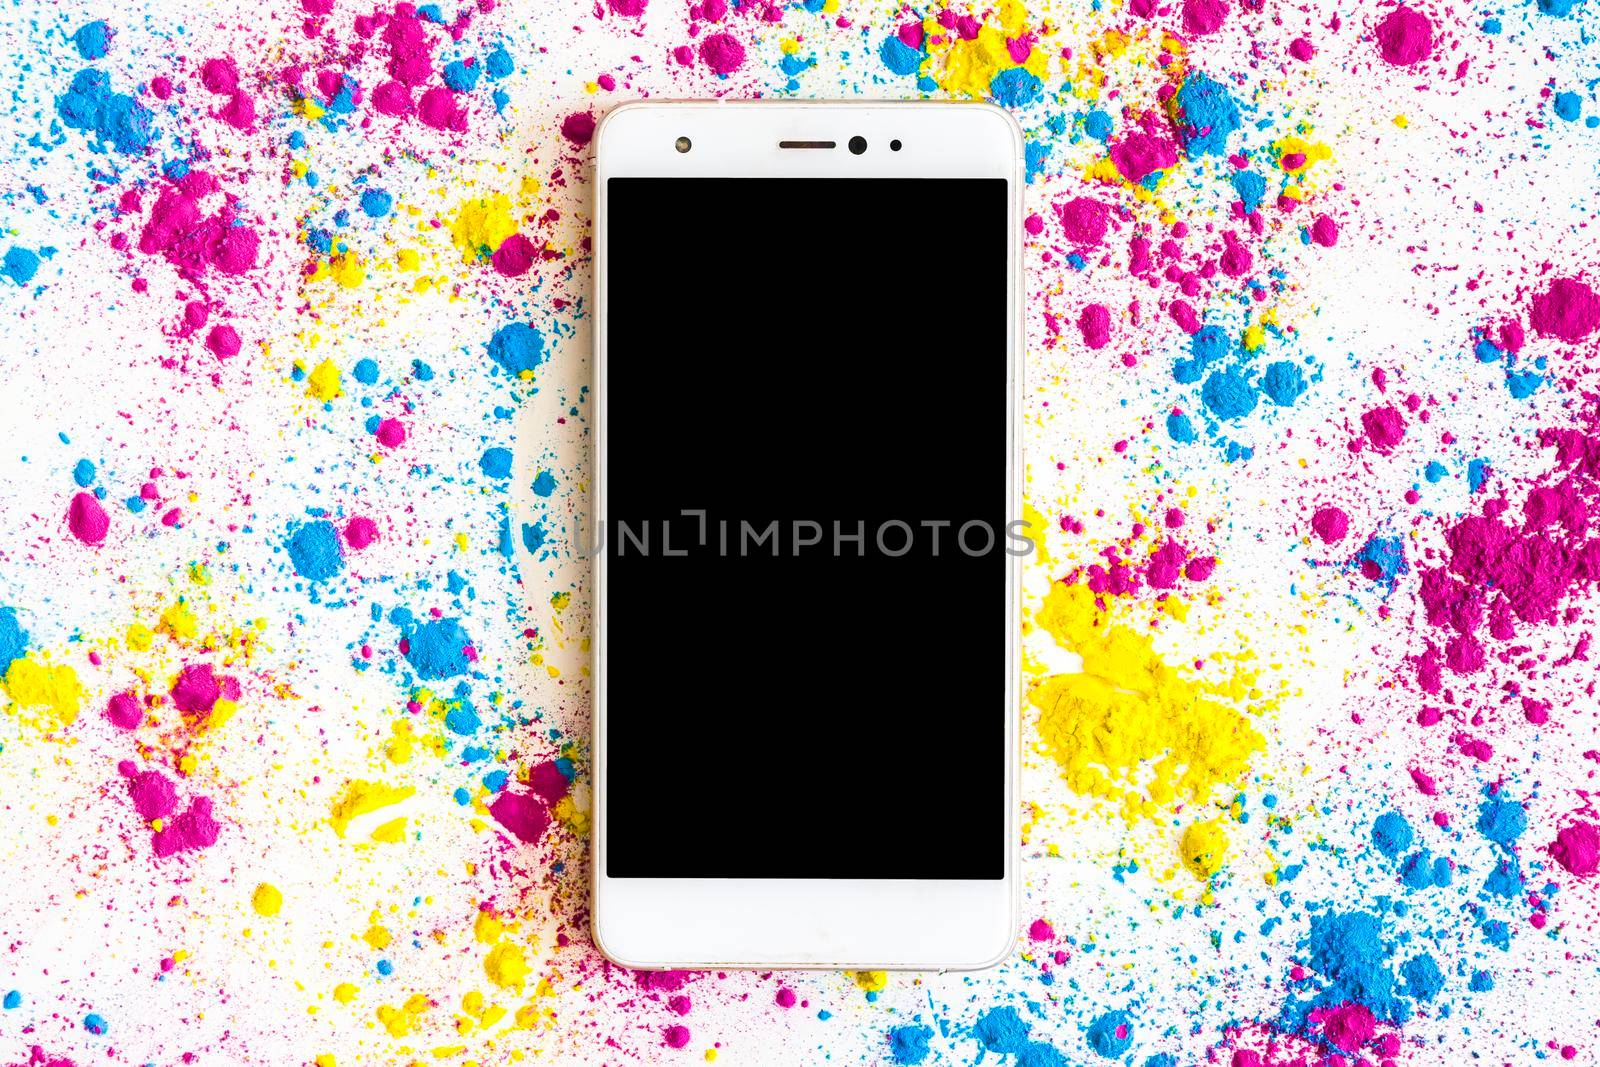 holi color powder around smartphone with black screen display by Zahard